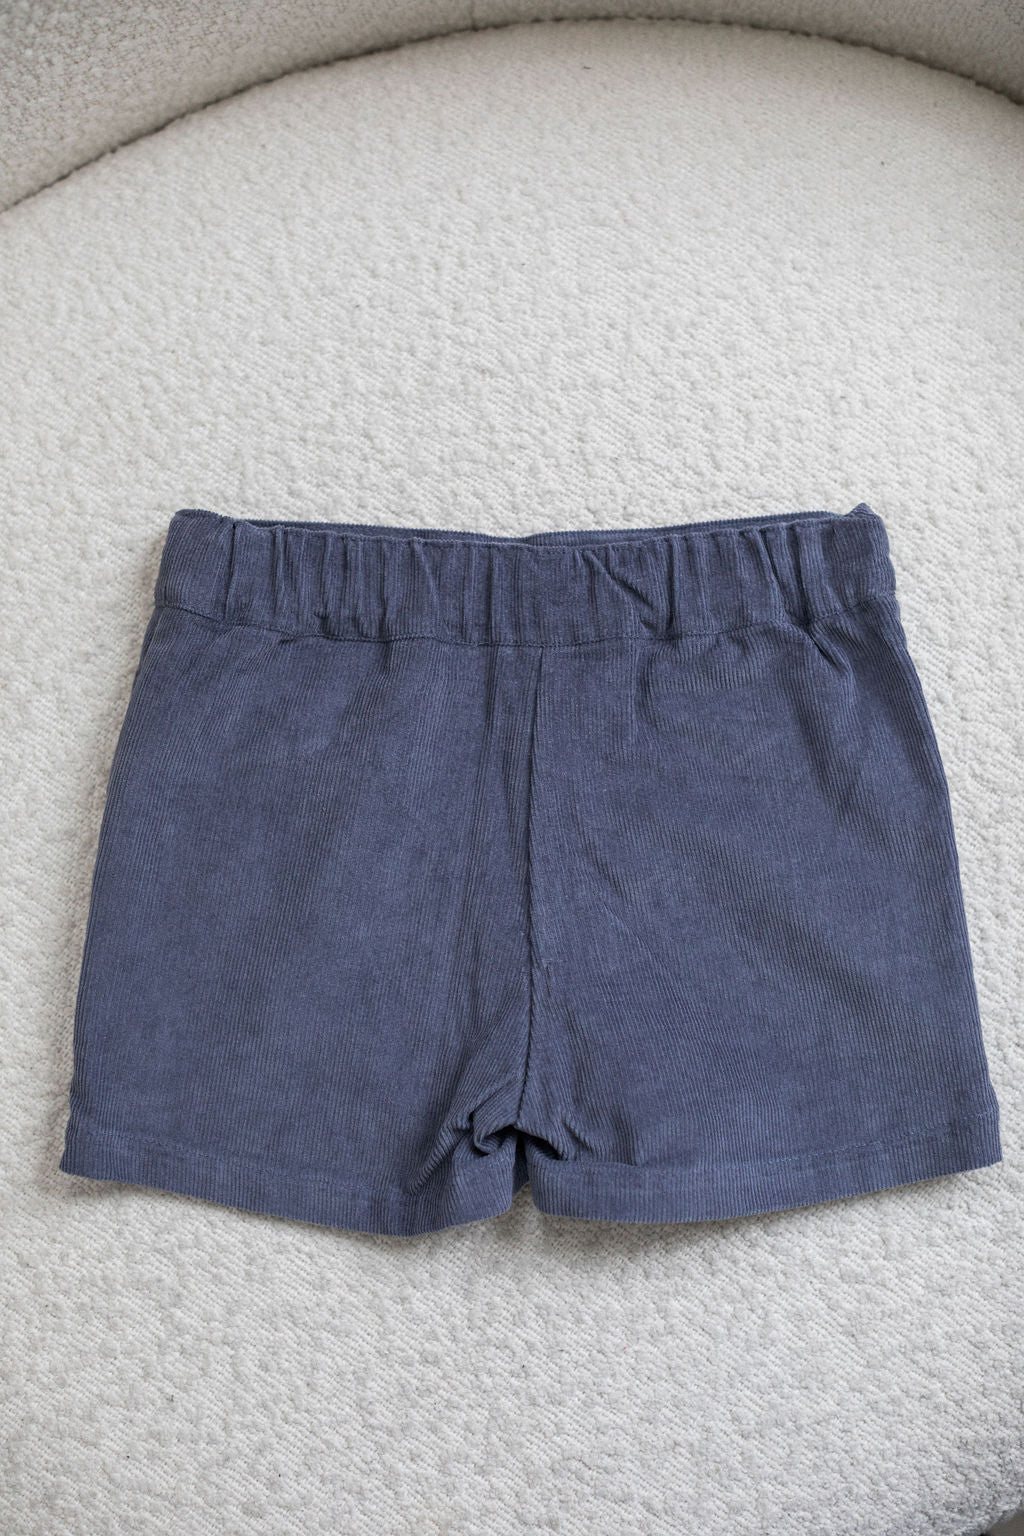 Corduroy shorts